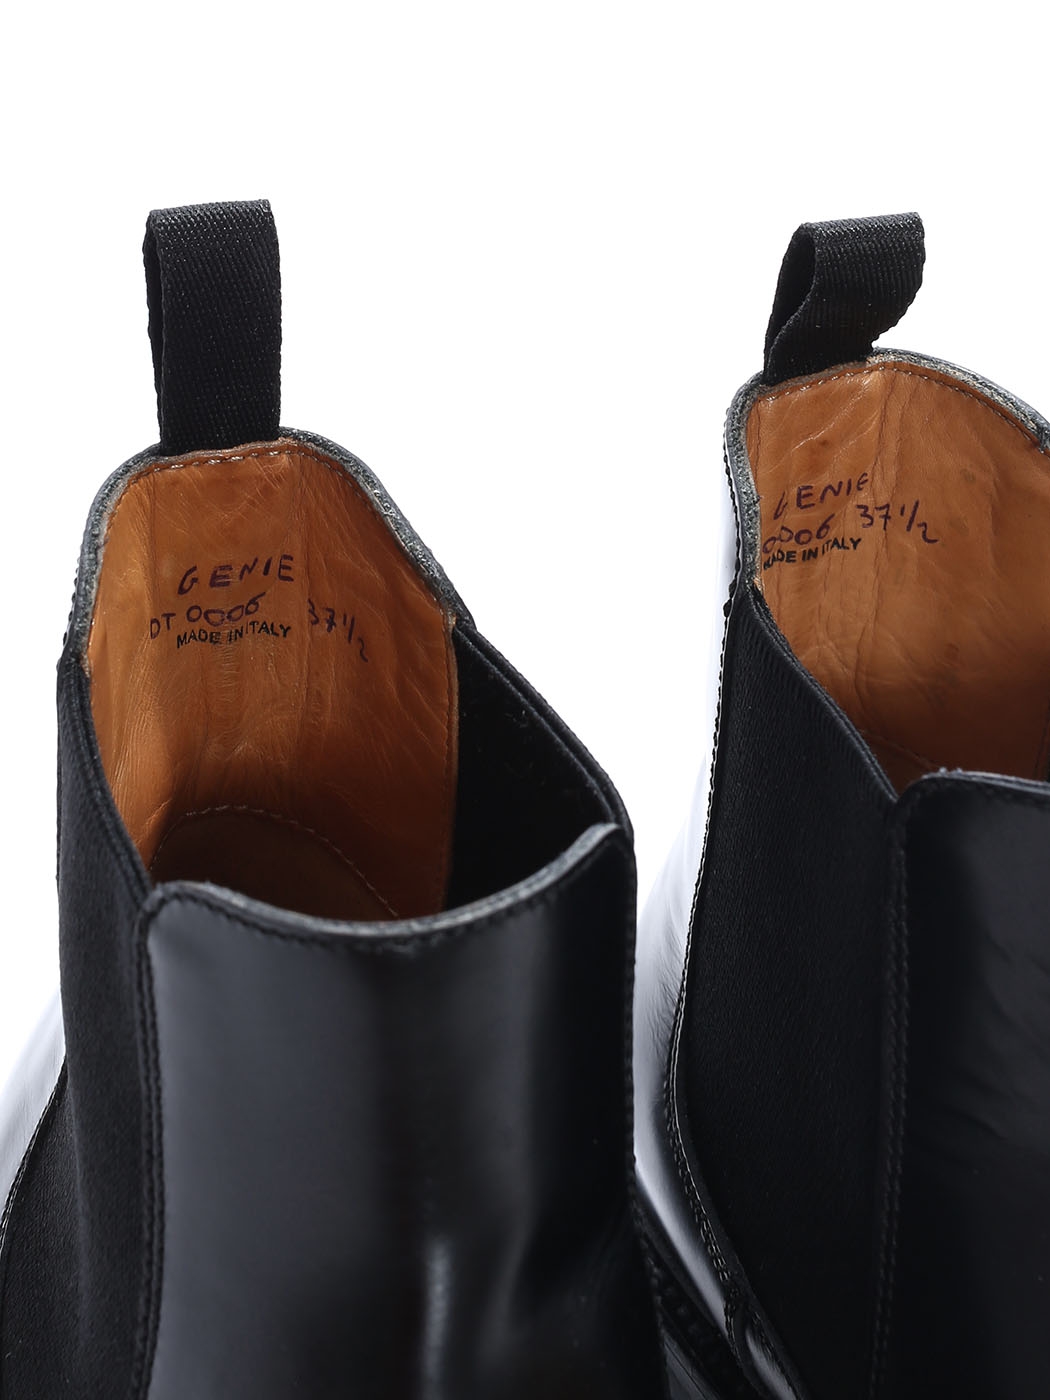 Louise Paris - CHURCH'S Genie black patent leather Chelsea flat ankle ...